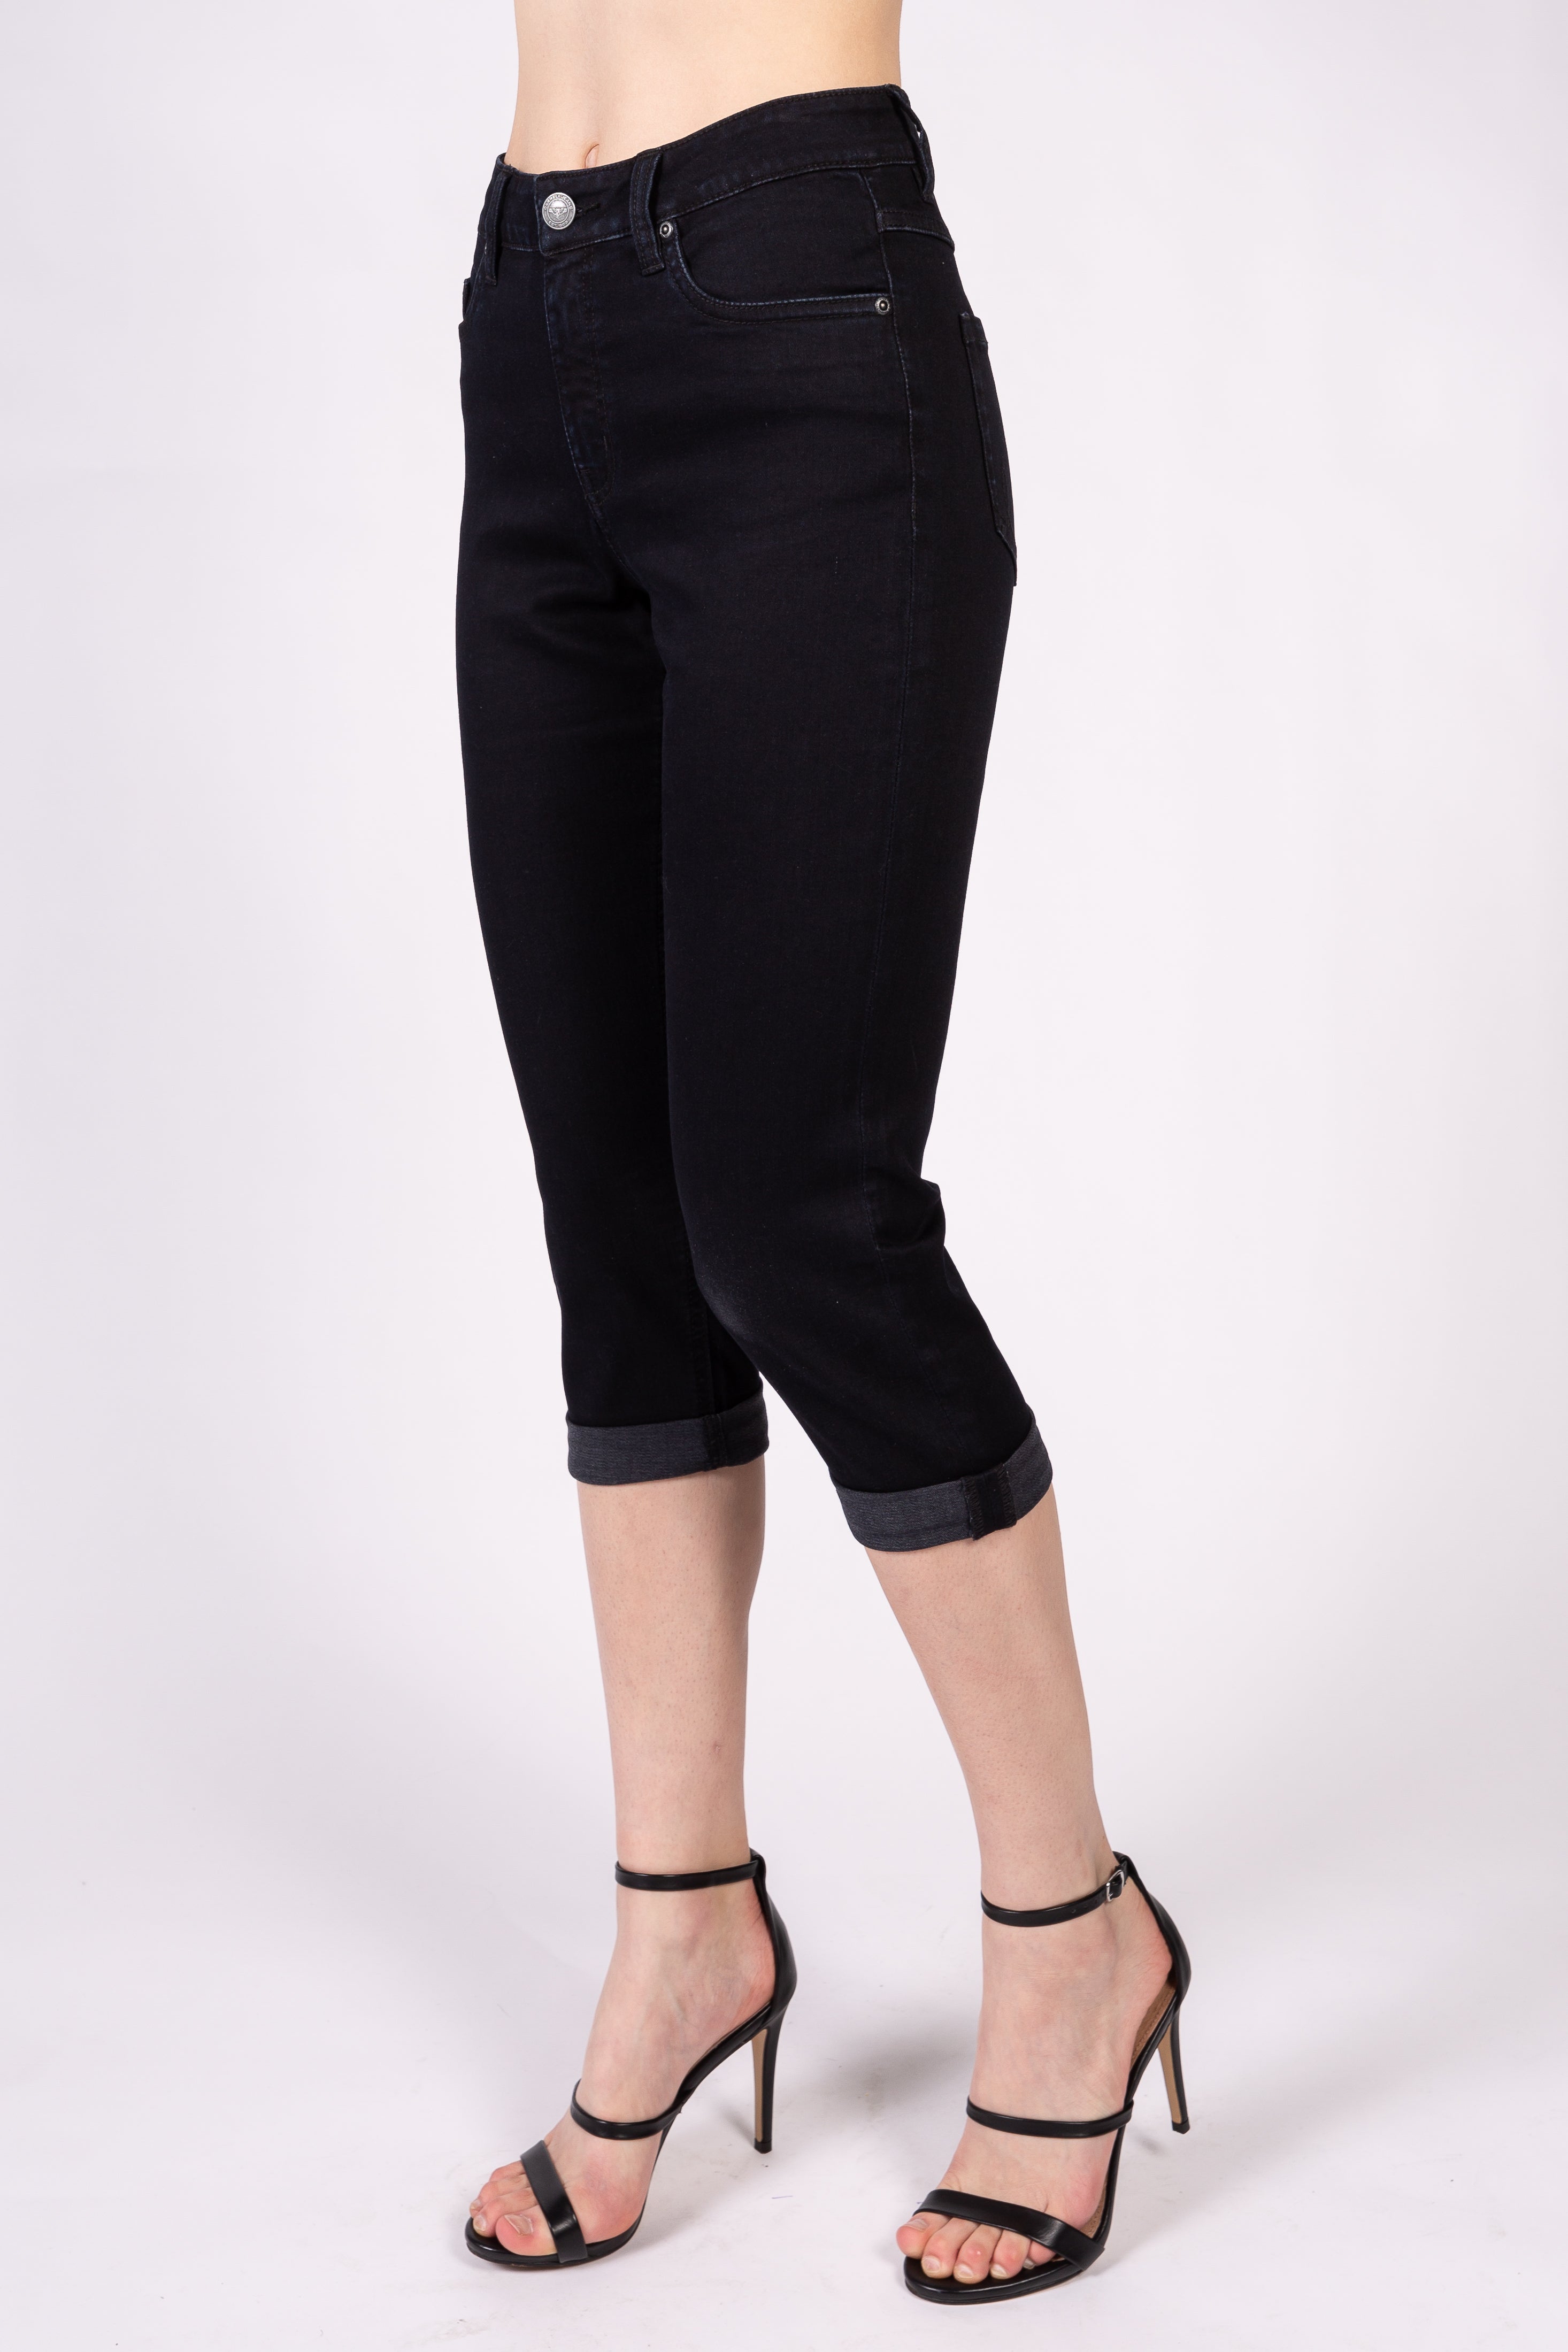 Carreli Jeans®  Angela Fit Capri In Black Wash